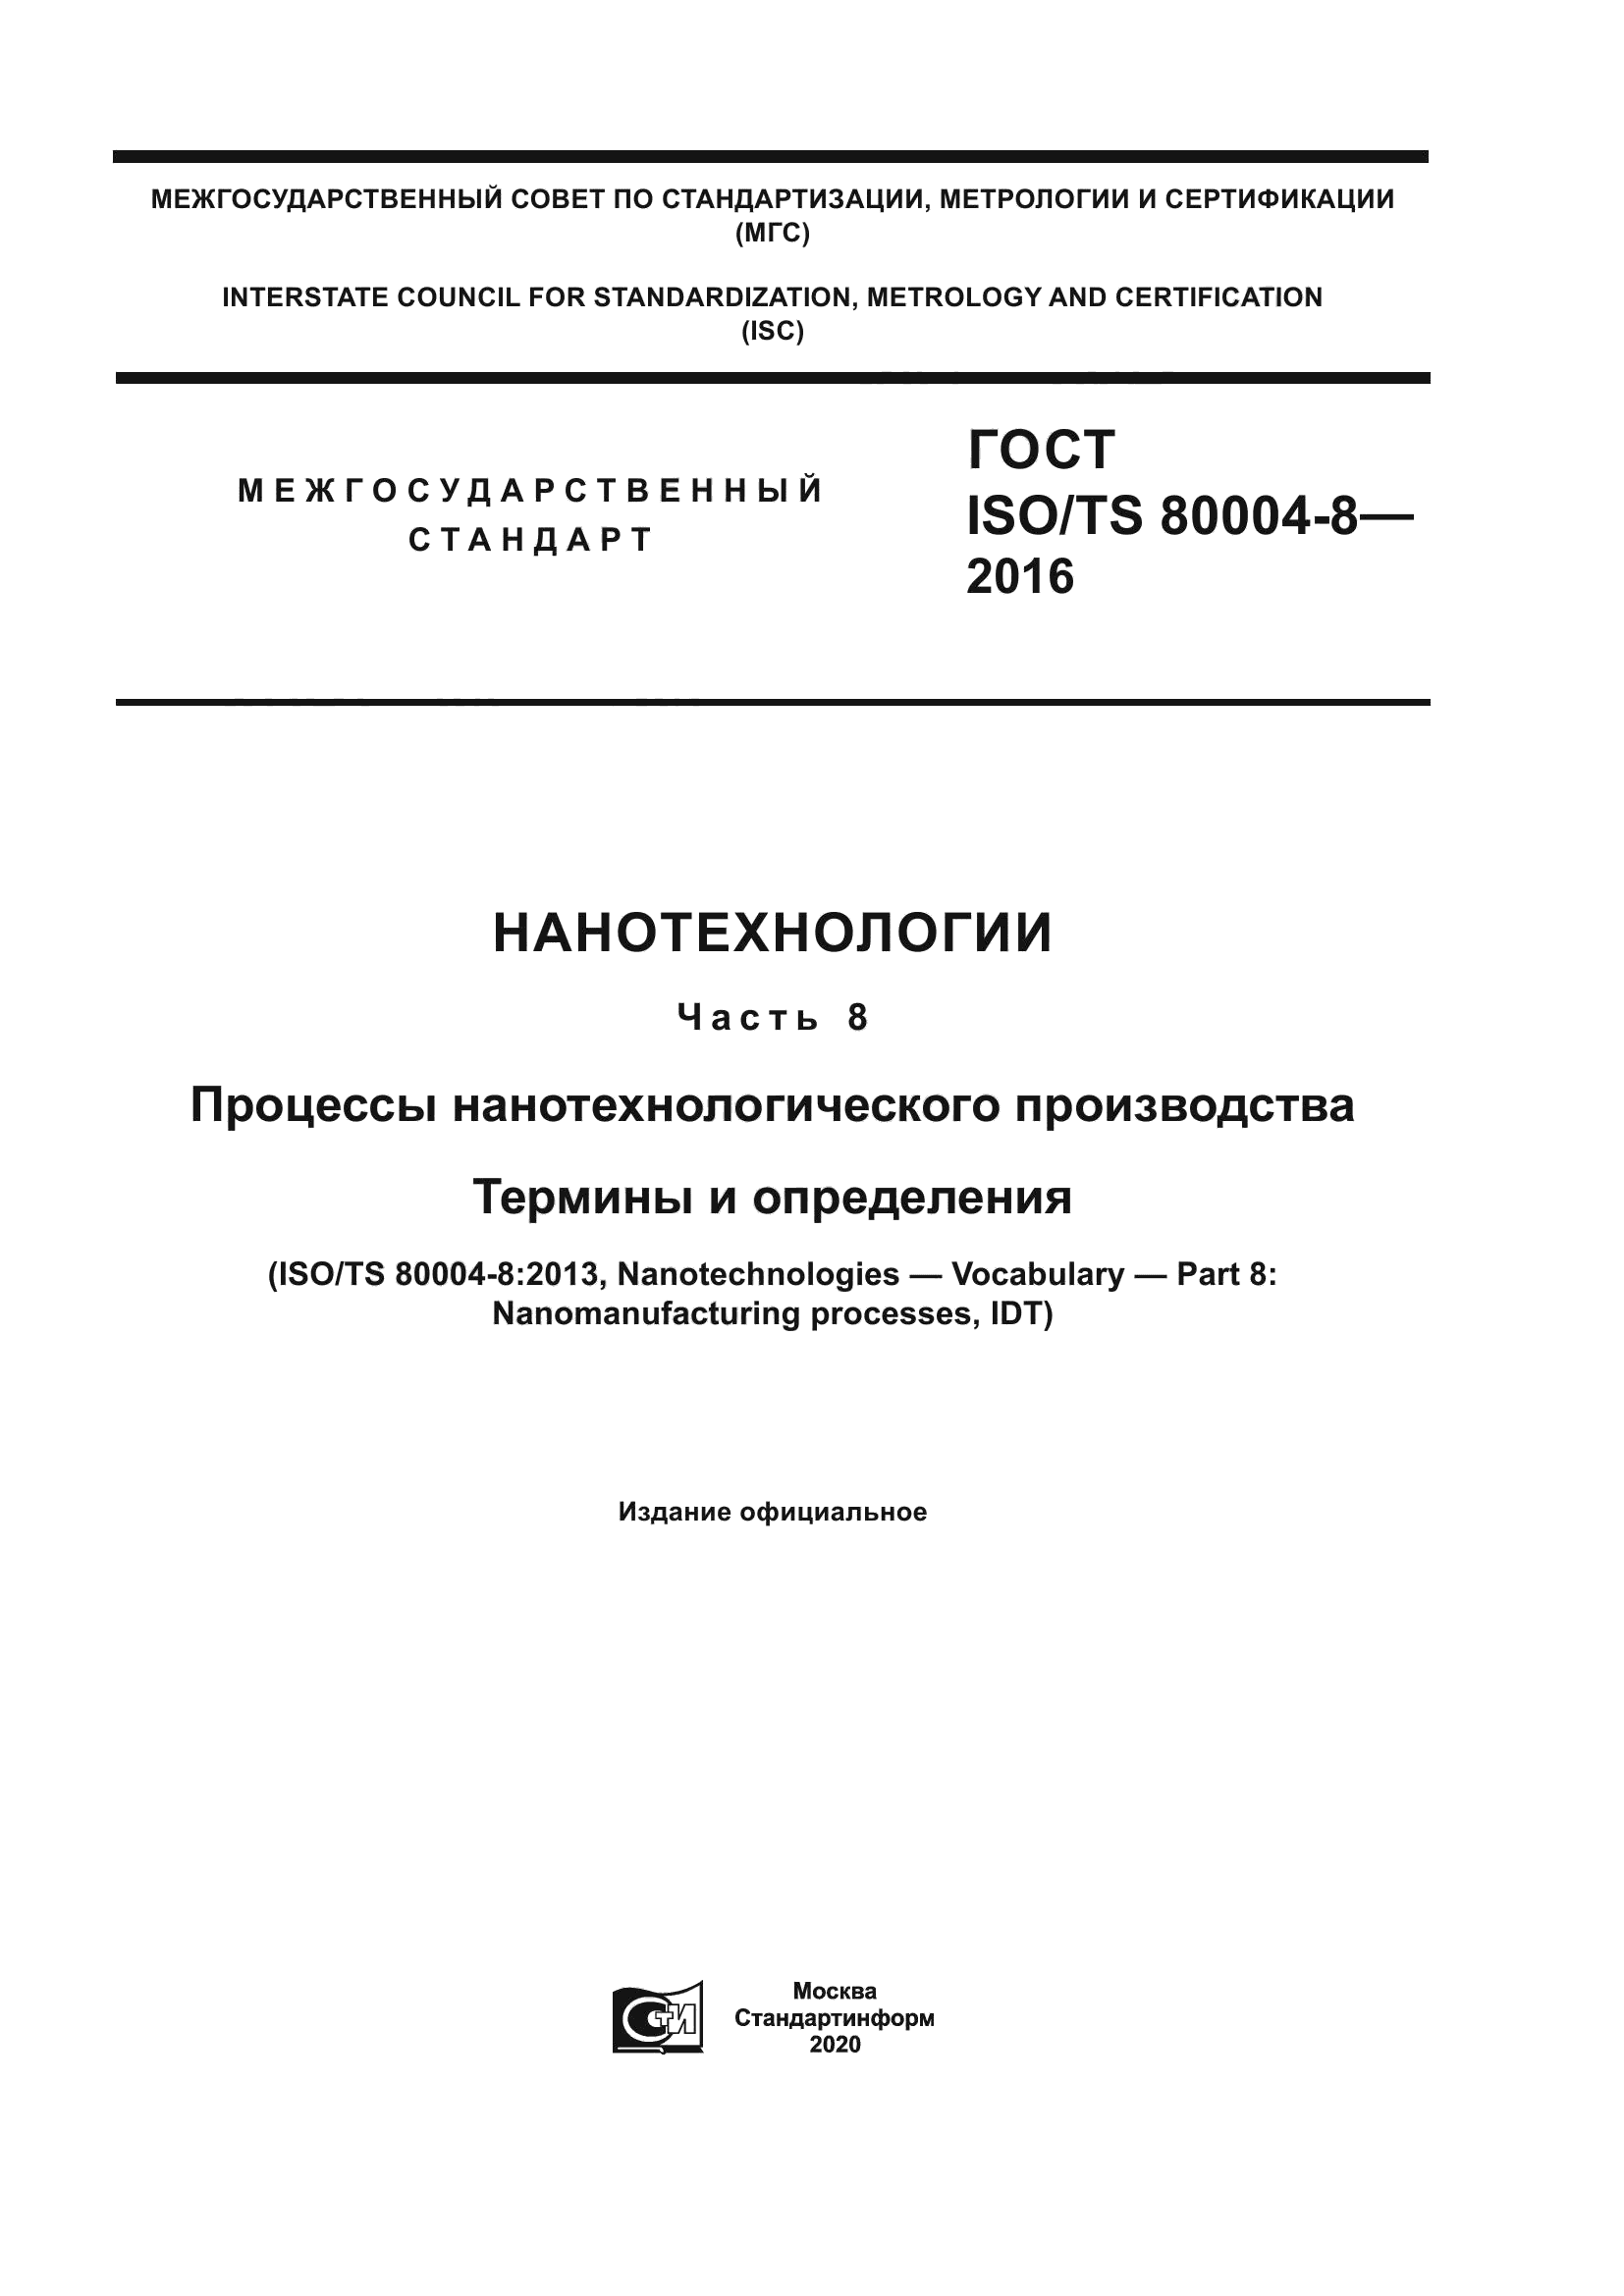 ГОСТ ISO/TS 80004-8-2016